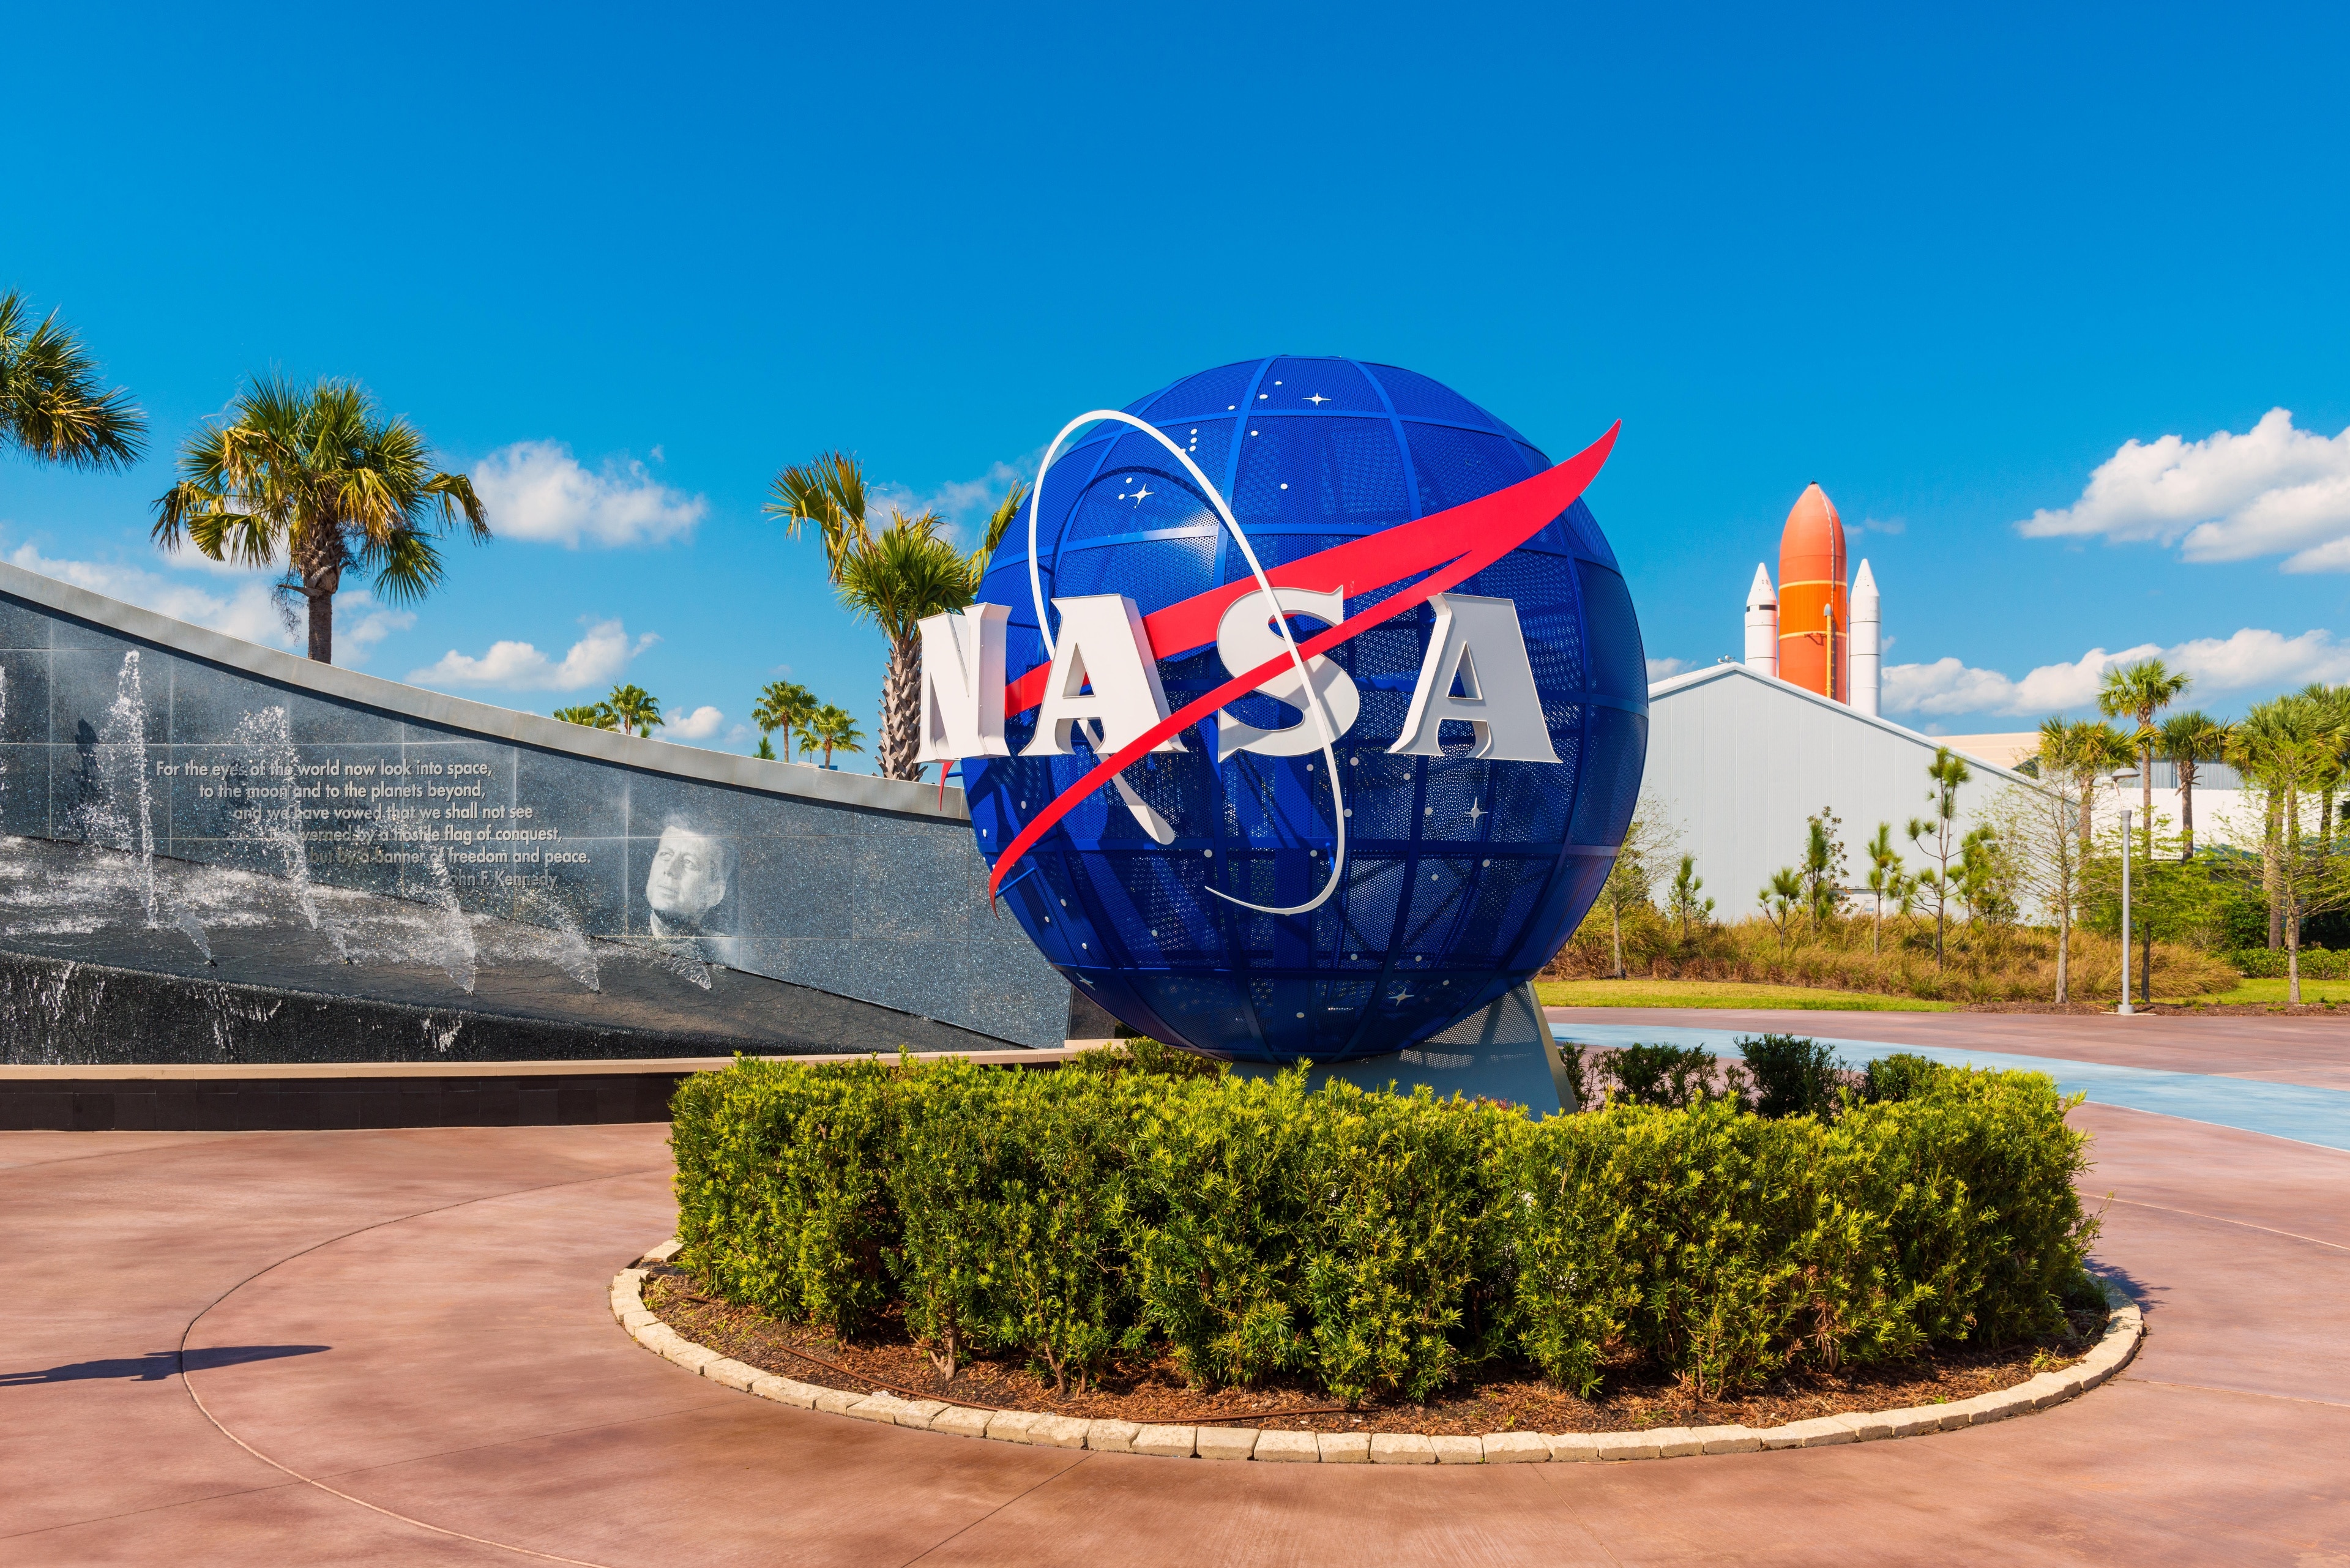 Kennedy Space Center, Titusville, Florida, US